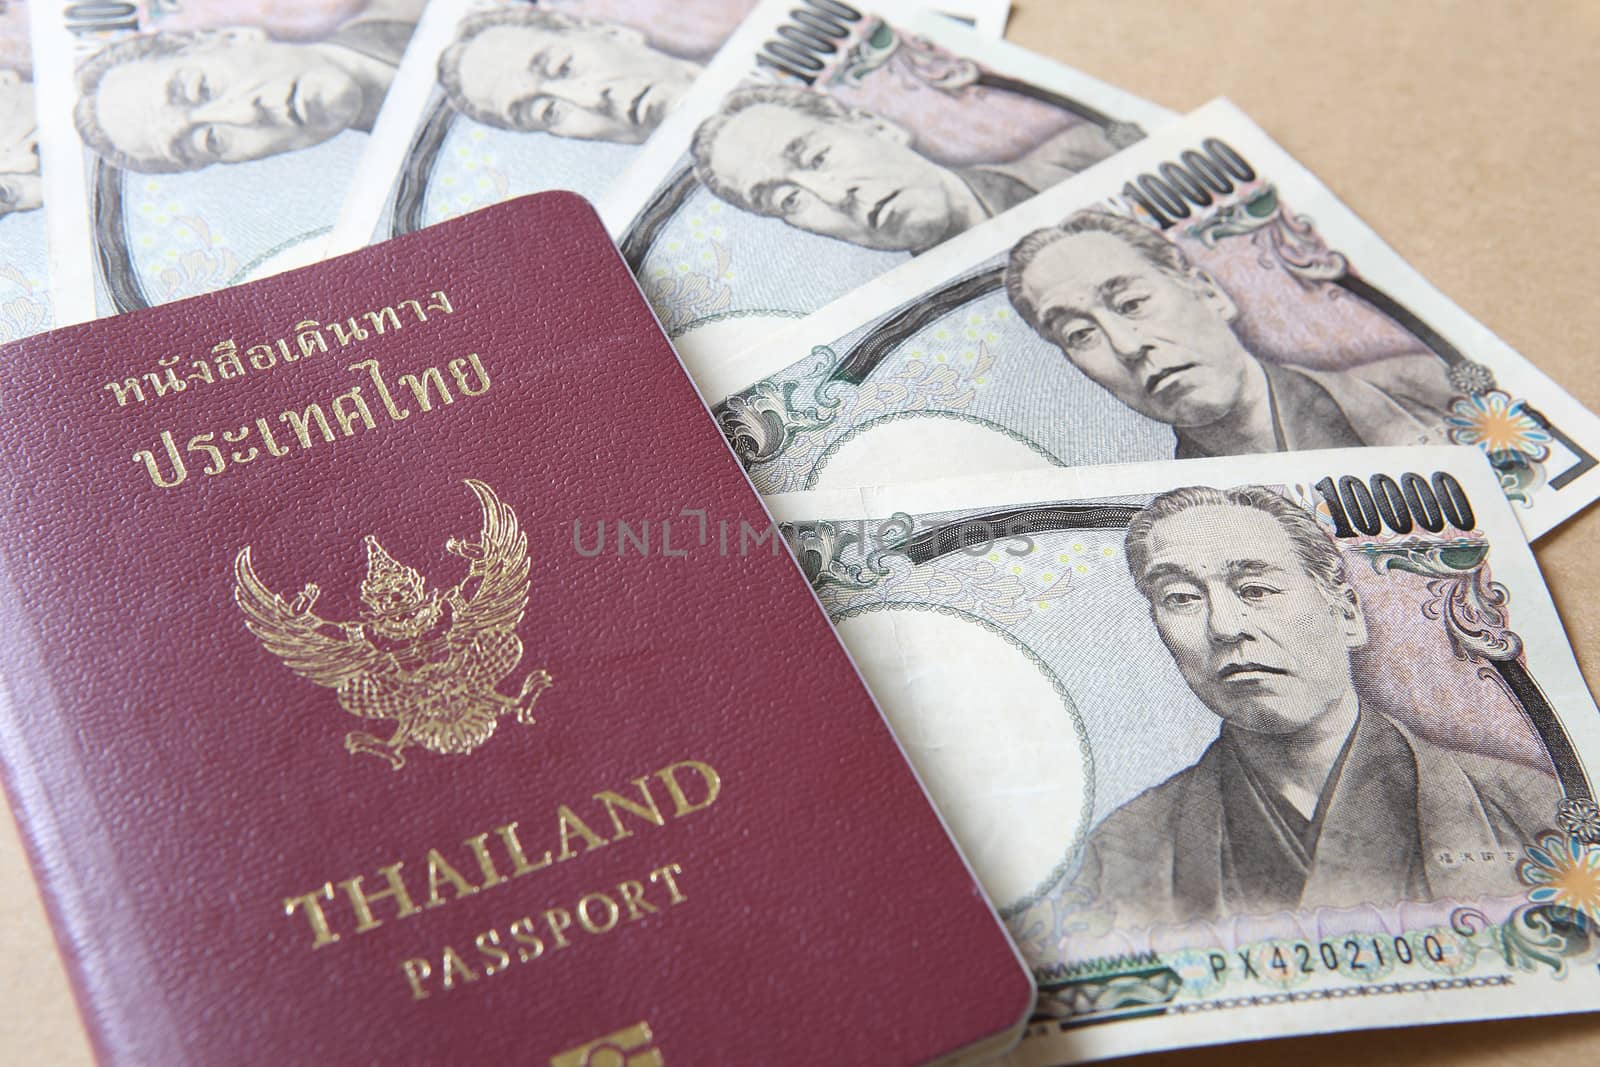 Thailand passport and Japanese Yen money by rufous